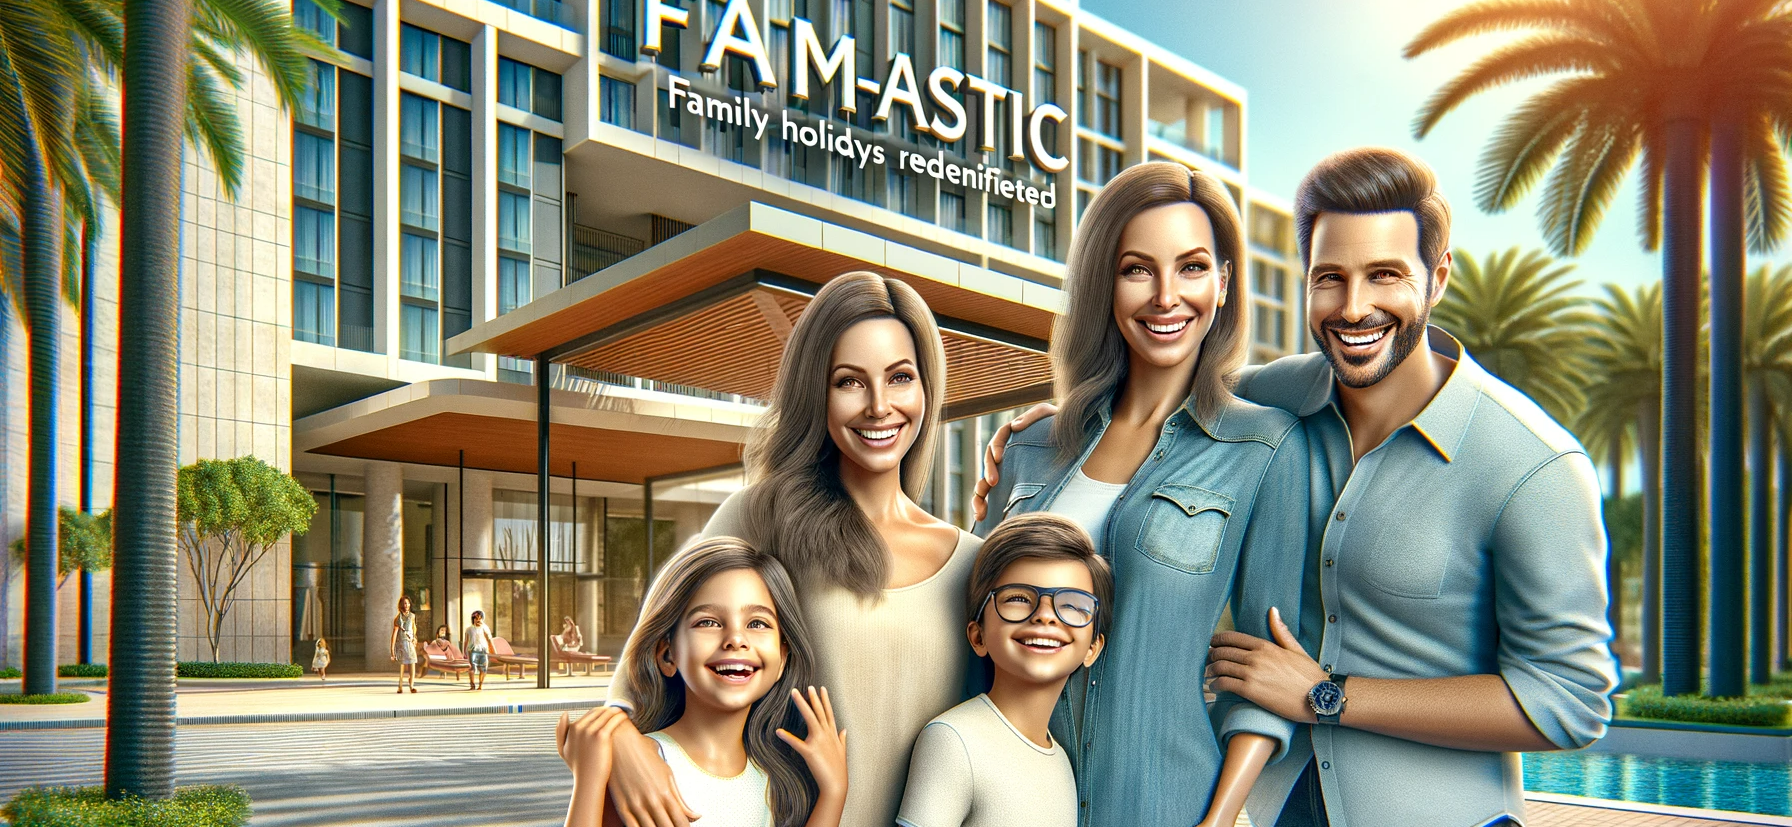 Fam-Tastic Marriott: Family Holidays Redefined